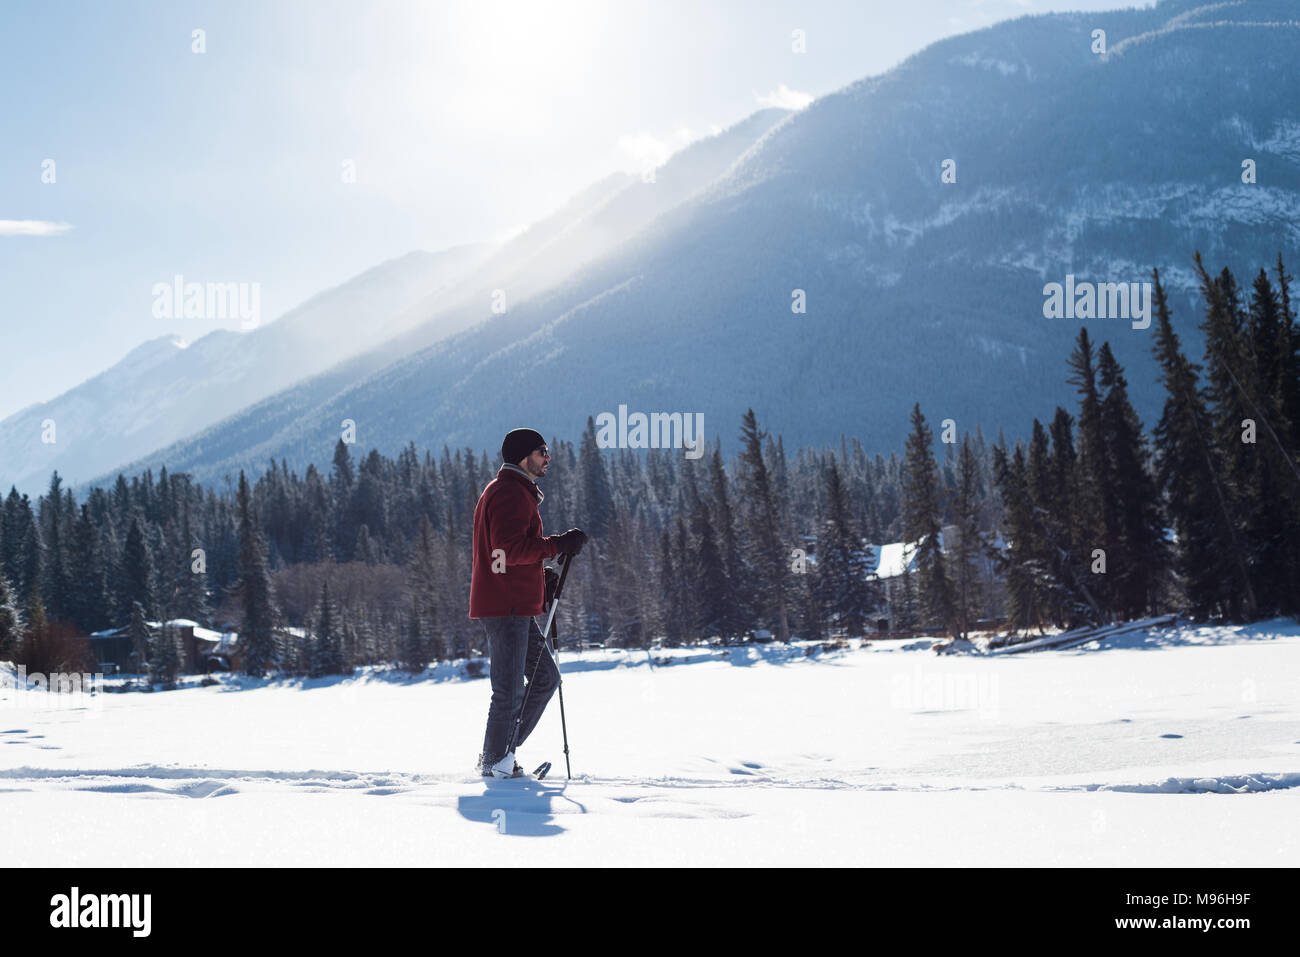 Man walking with ski poles in snowy landscape Stock Photo